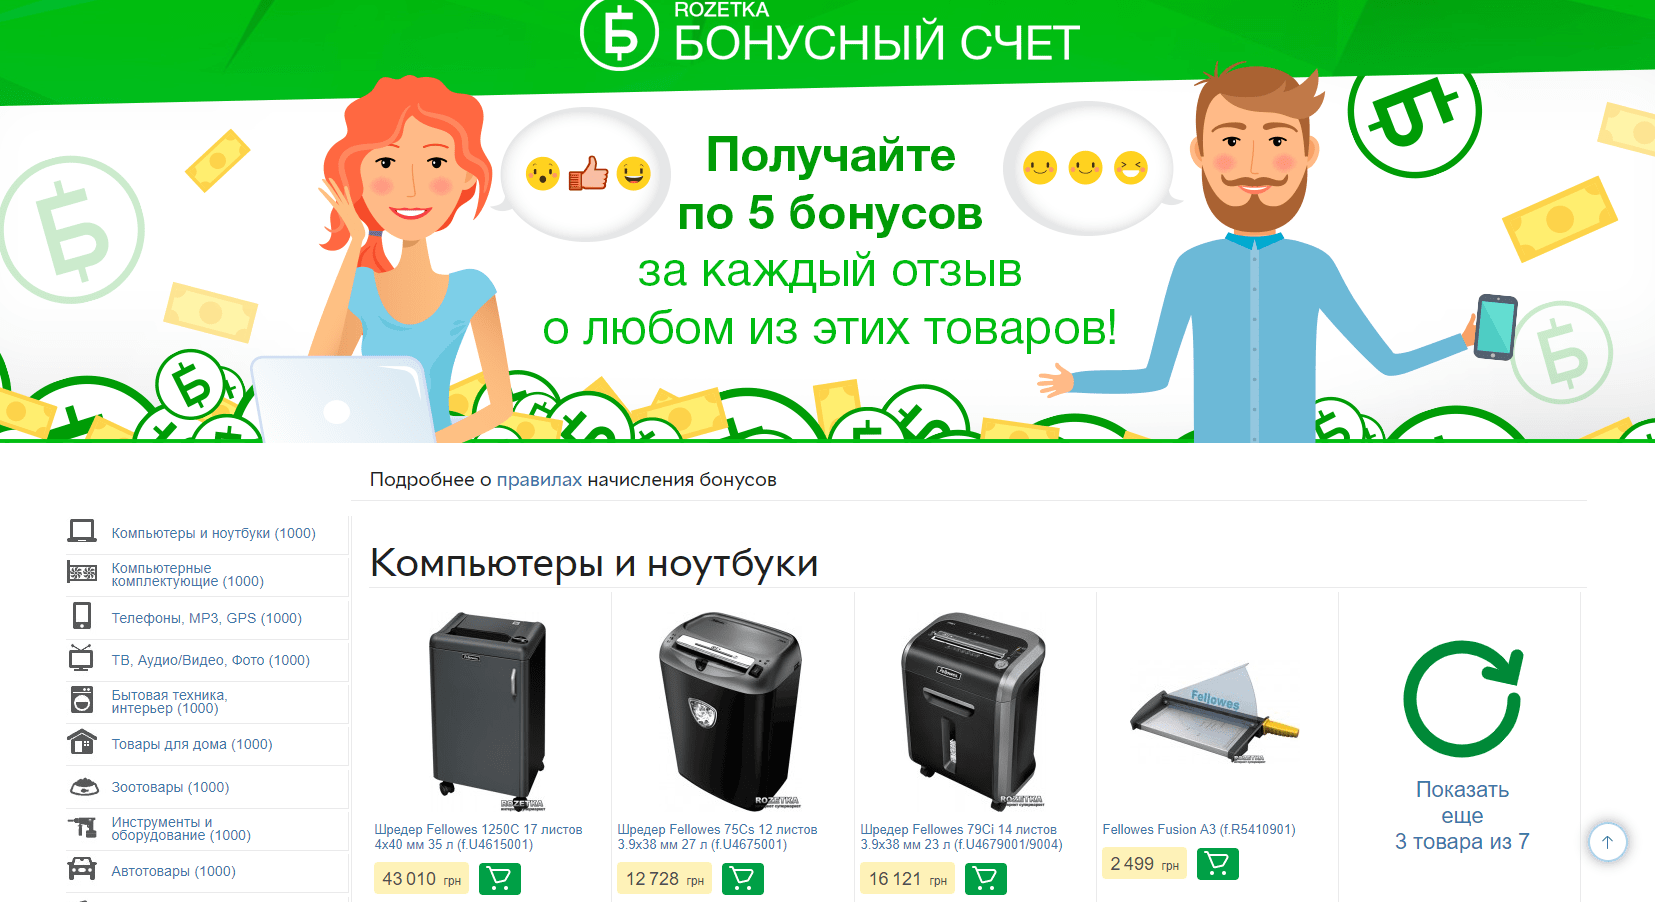 Программа «Бонусы за отзыв» в интернет-супермаркете Rozetka